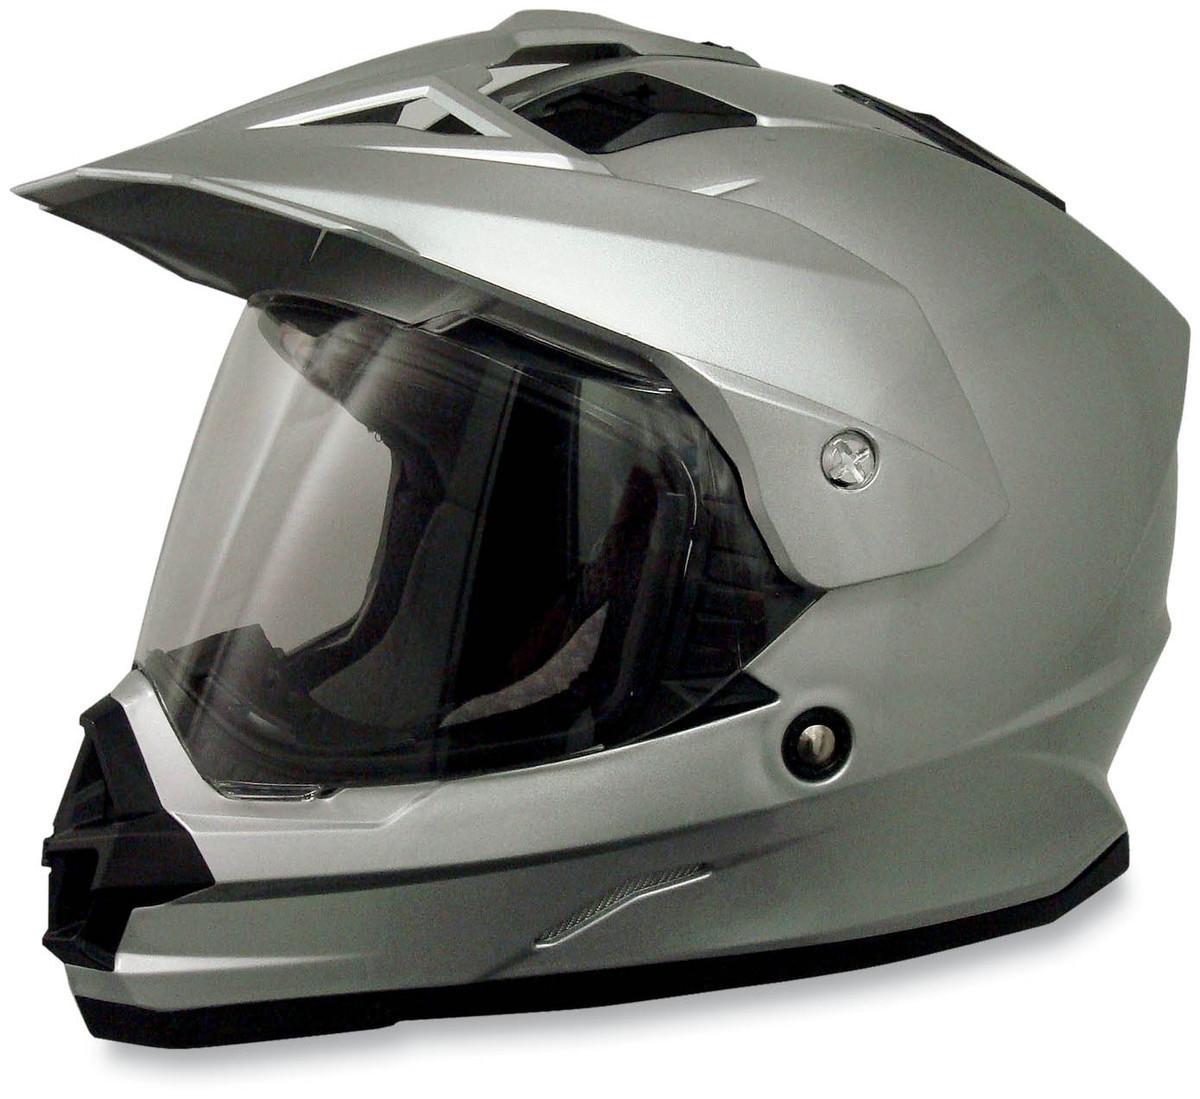 Afx fx-39 dual sport helmet solid silver